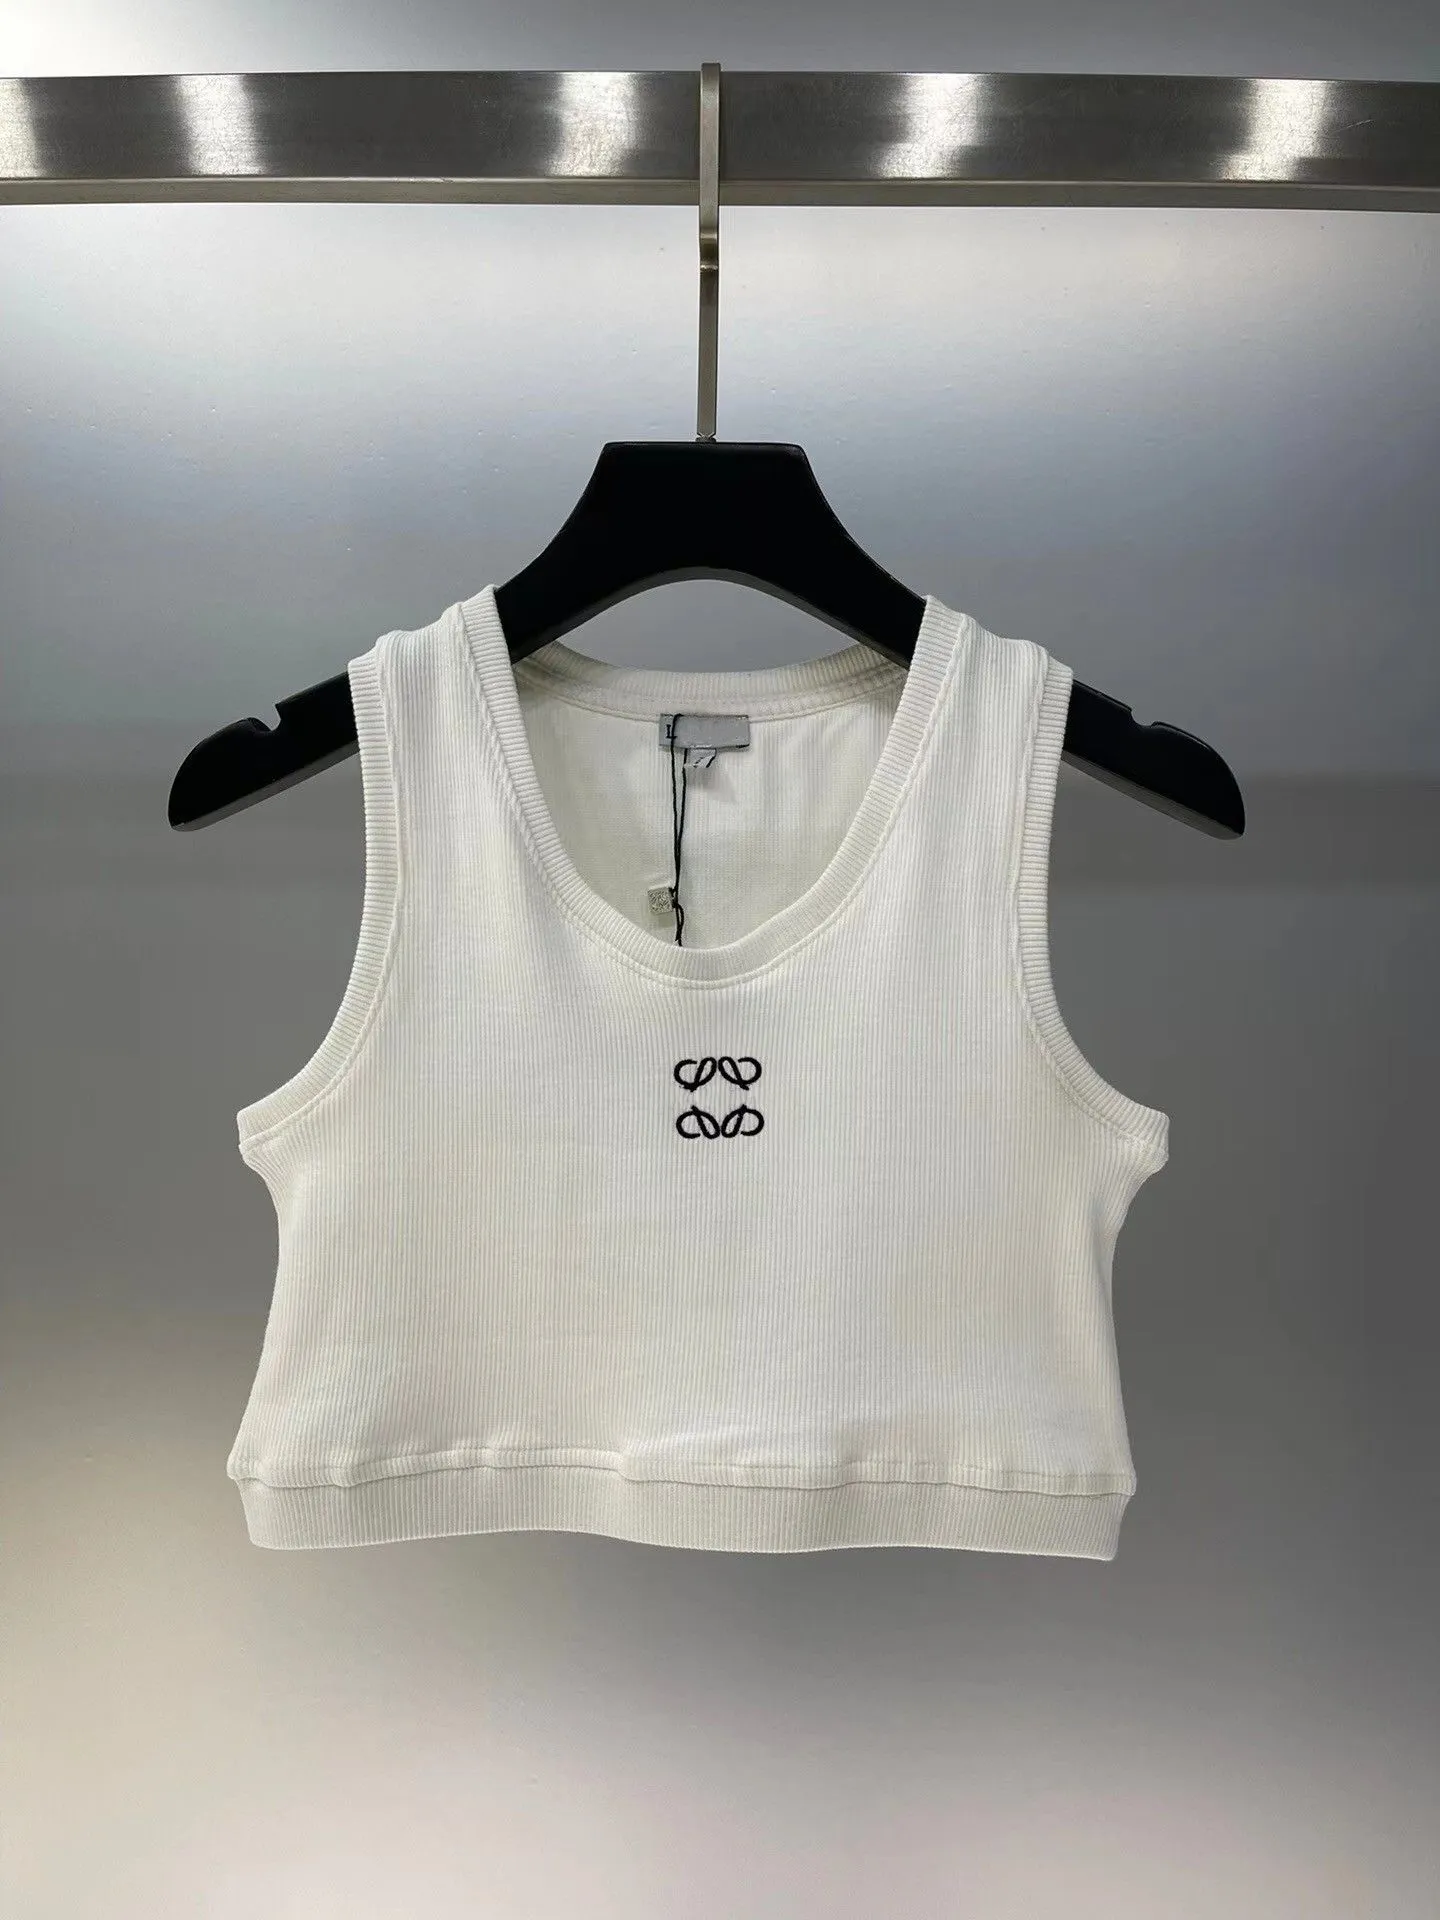 Bijgesneden T-shirts Vrouwen Knits Tank Top Designer Borduurvest Mouwloos Ademend Gebreide Trui Dames Sport Tops q9